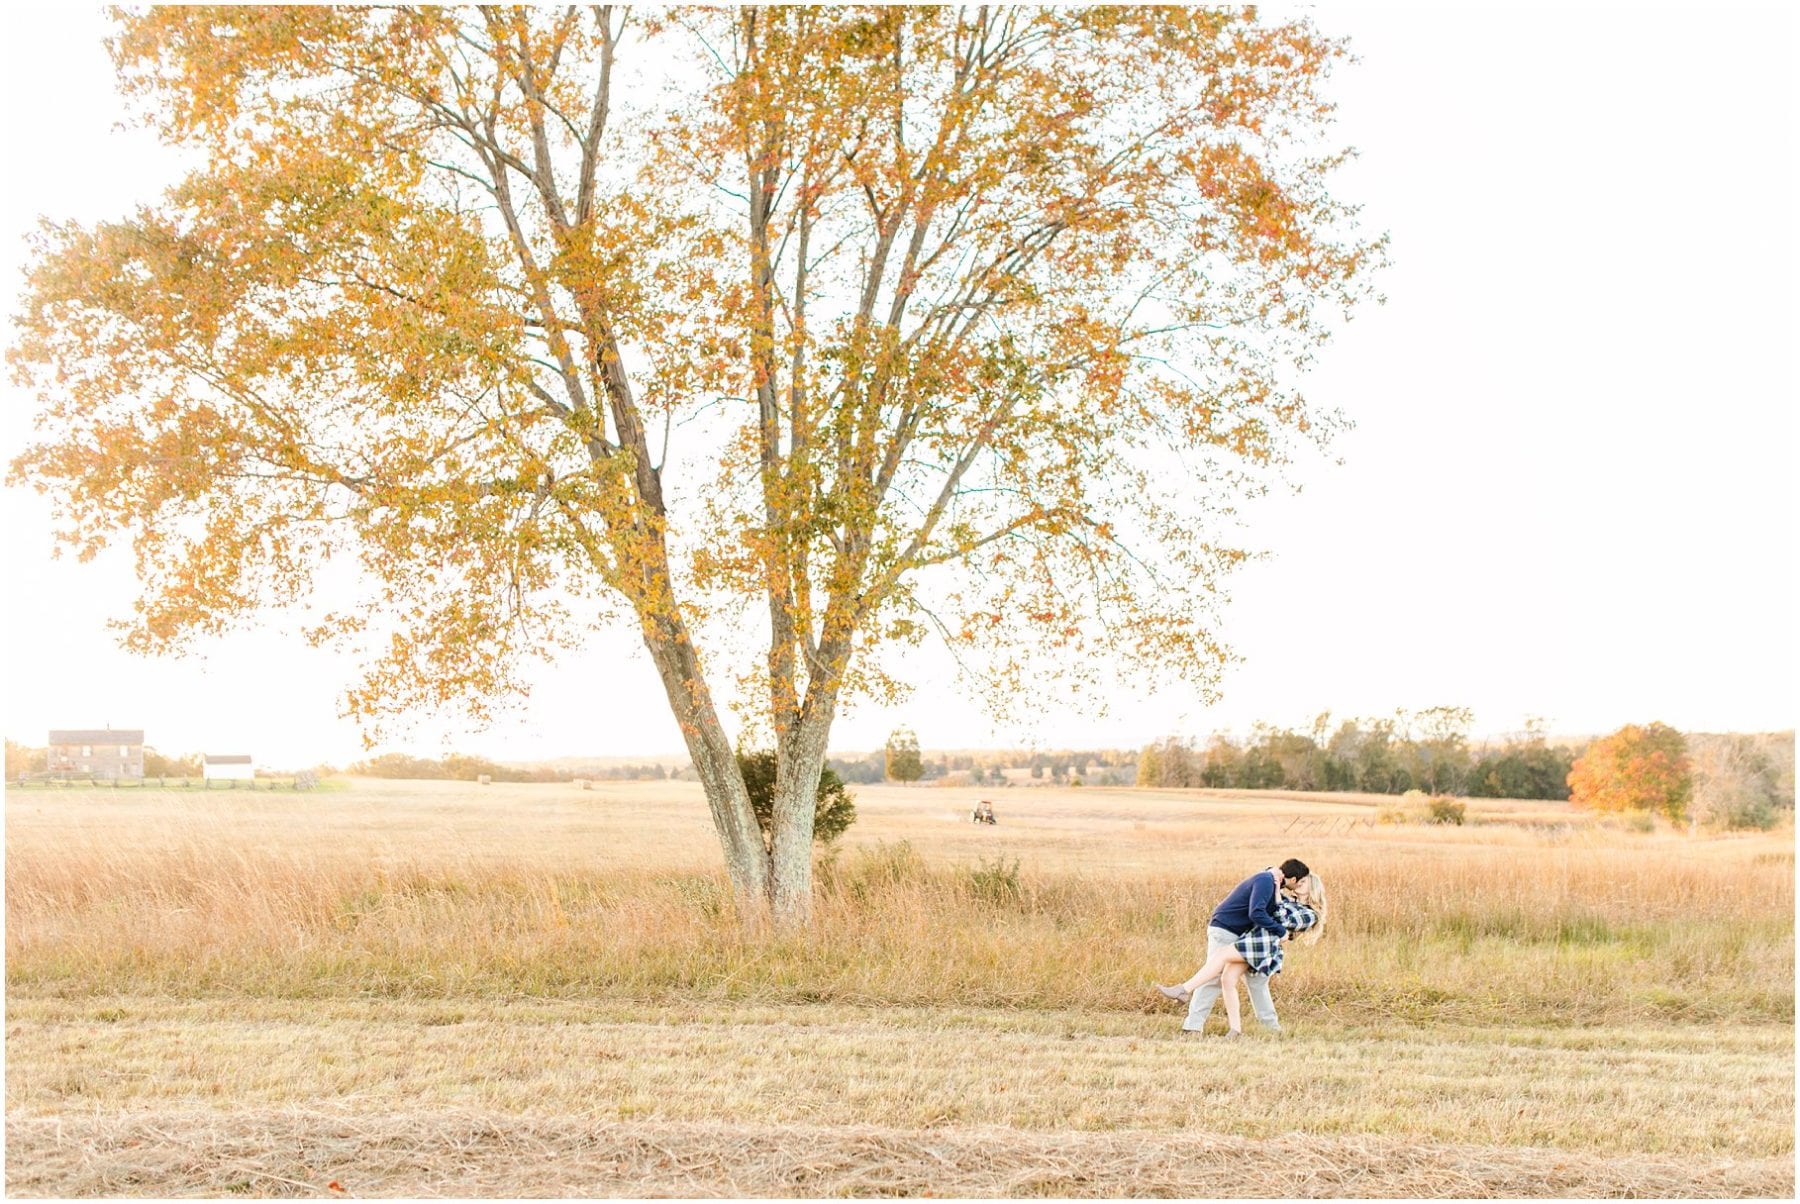 Autumn Manassas Battlefield Engagement Session by Megan Kelsey Photography-188.jpg